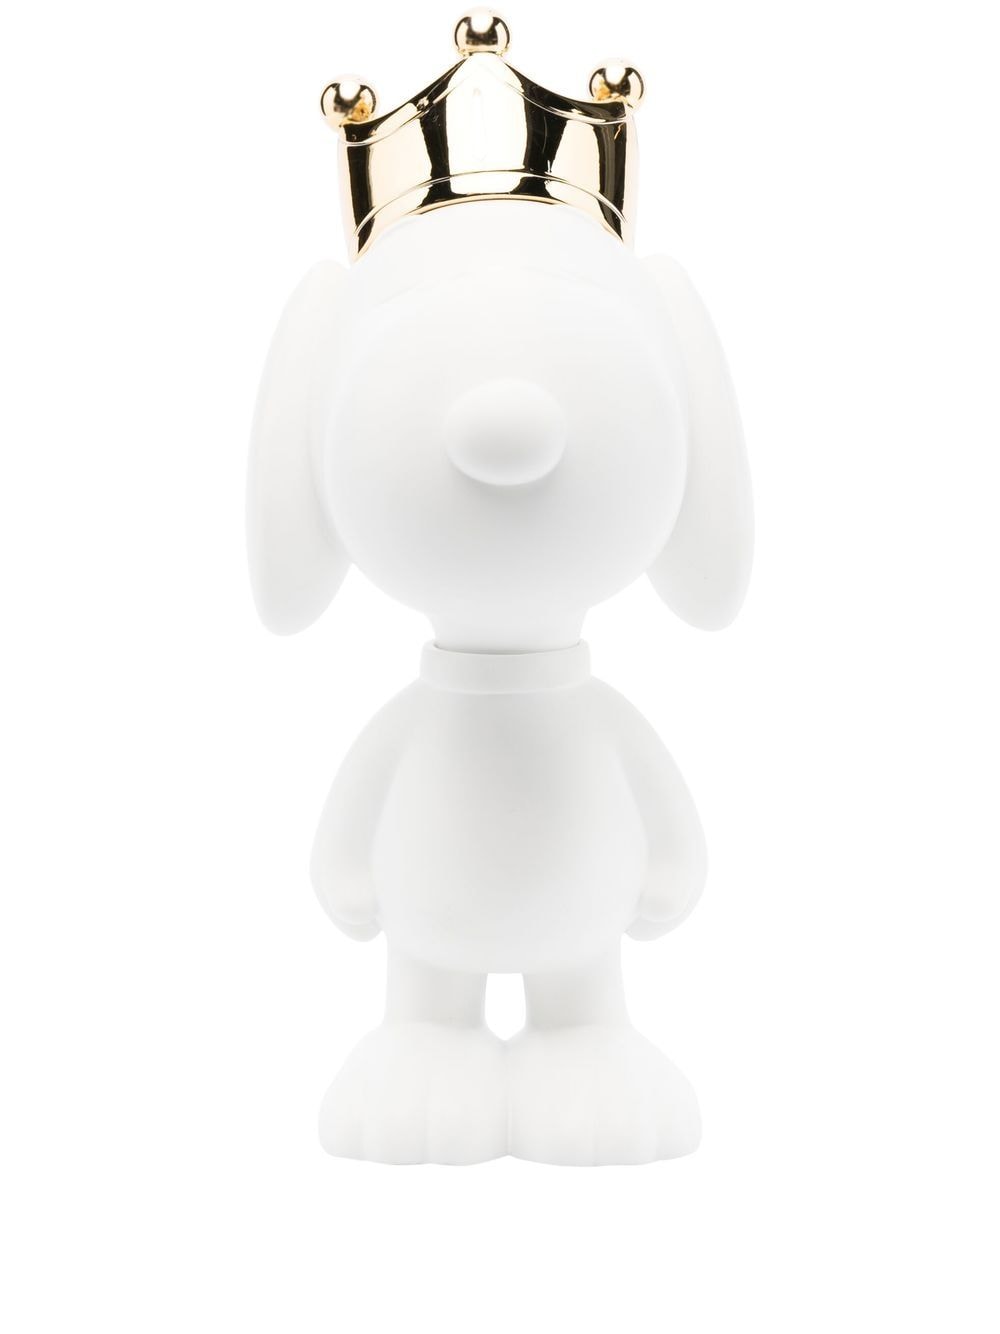 Image 1 of LEBLON DELIENNE Snoopy Crown figurine (31cm)